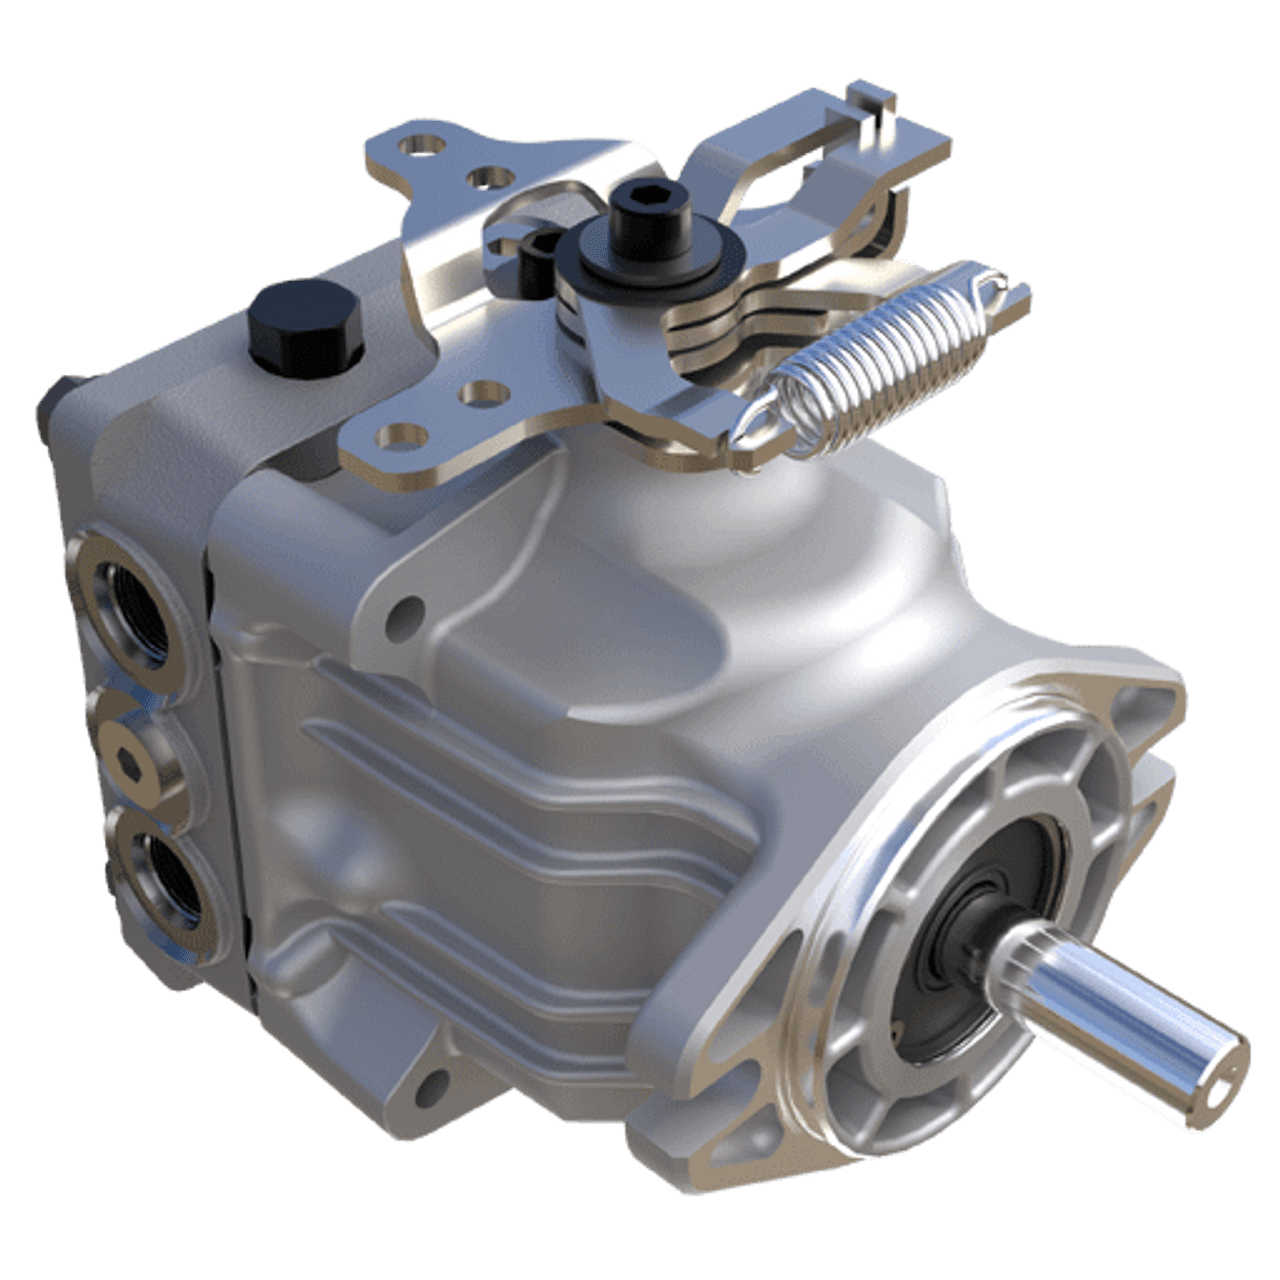 Hydro Gear PK-CGAC-GY1E-XXXX Hydraulic Pump PR Series | Original OEM Part | Free Shipping - LawnMowerPartsWorld.com